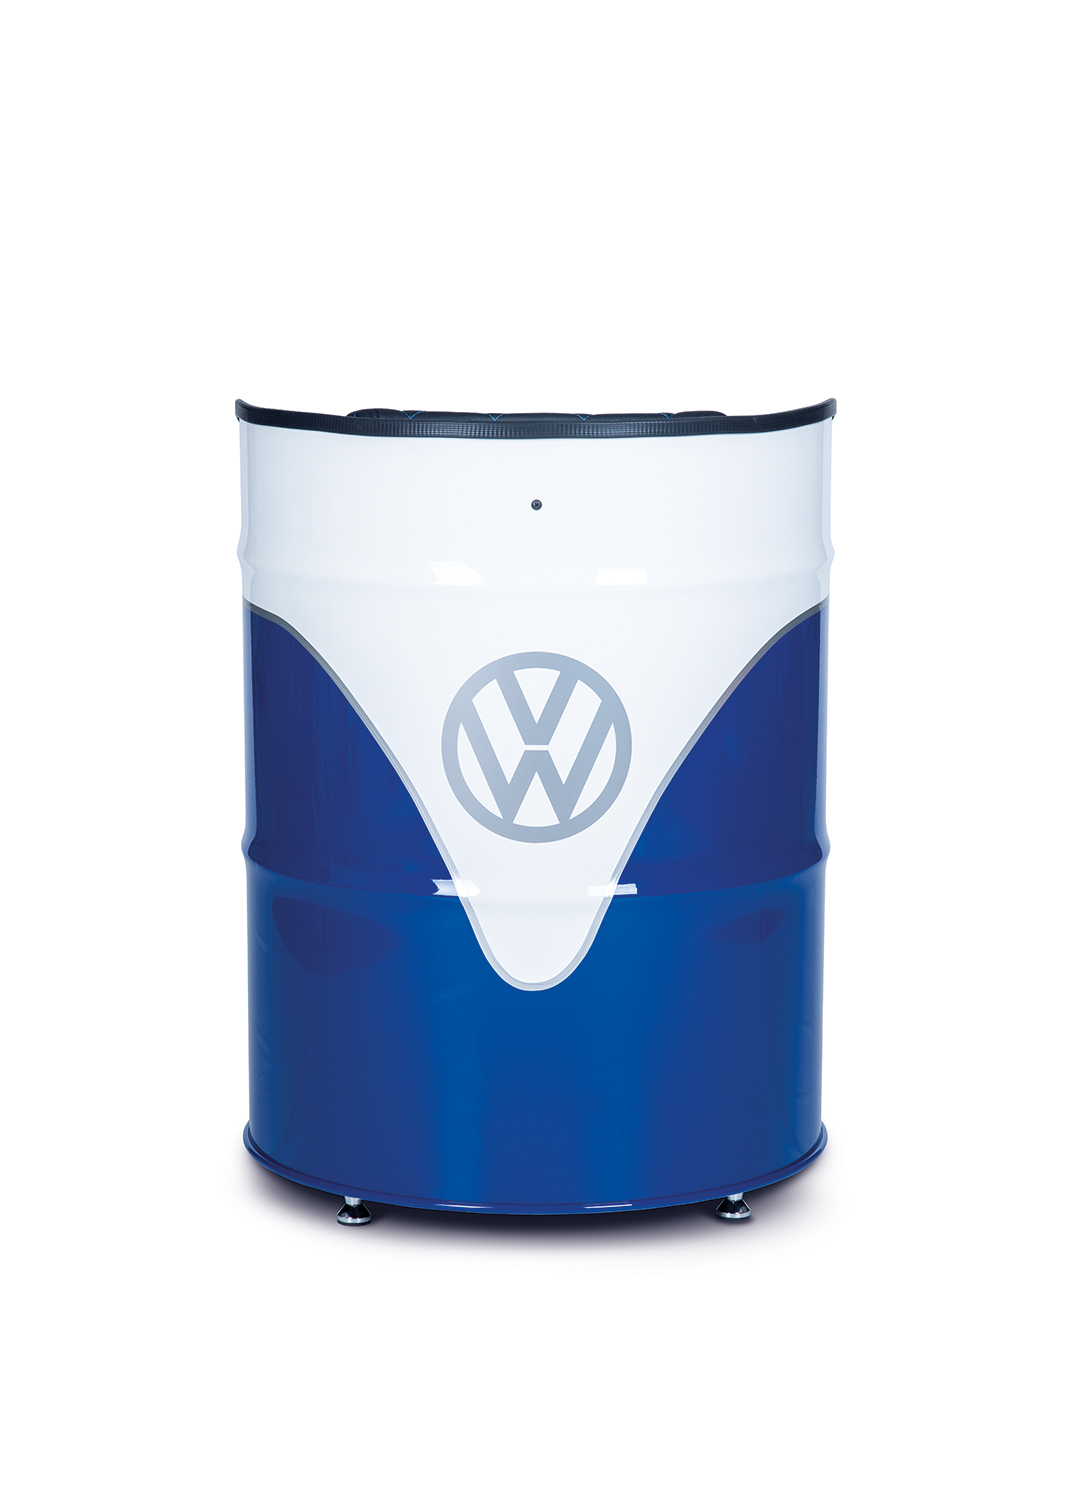 VW T1 Bus oil barrel armchair